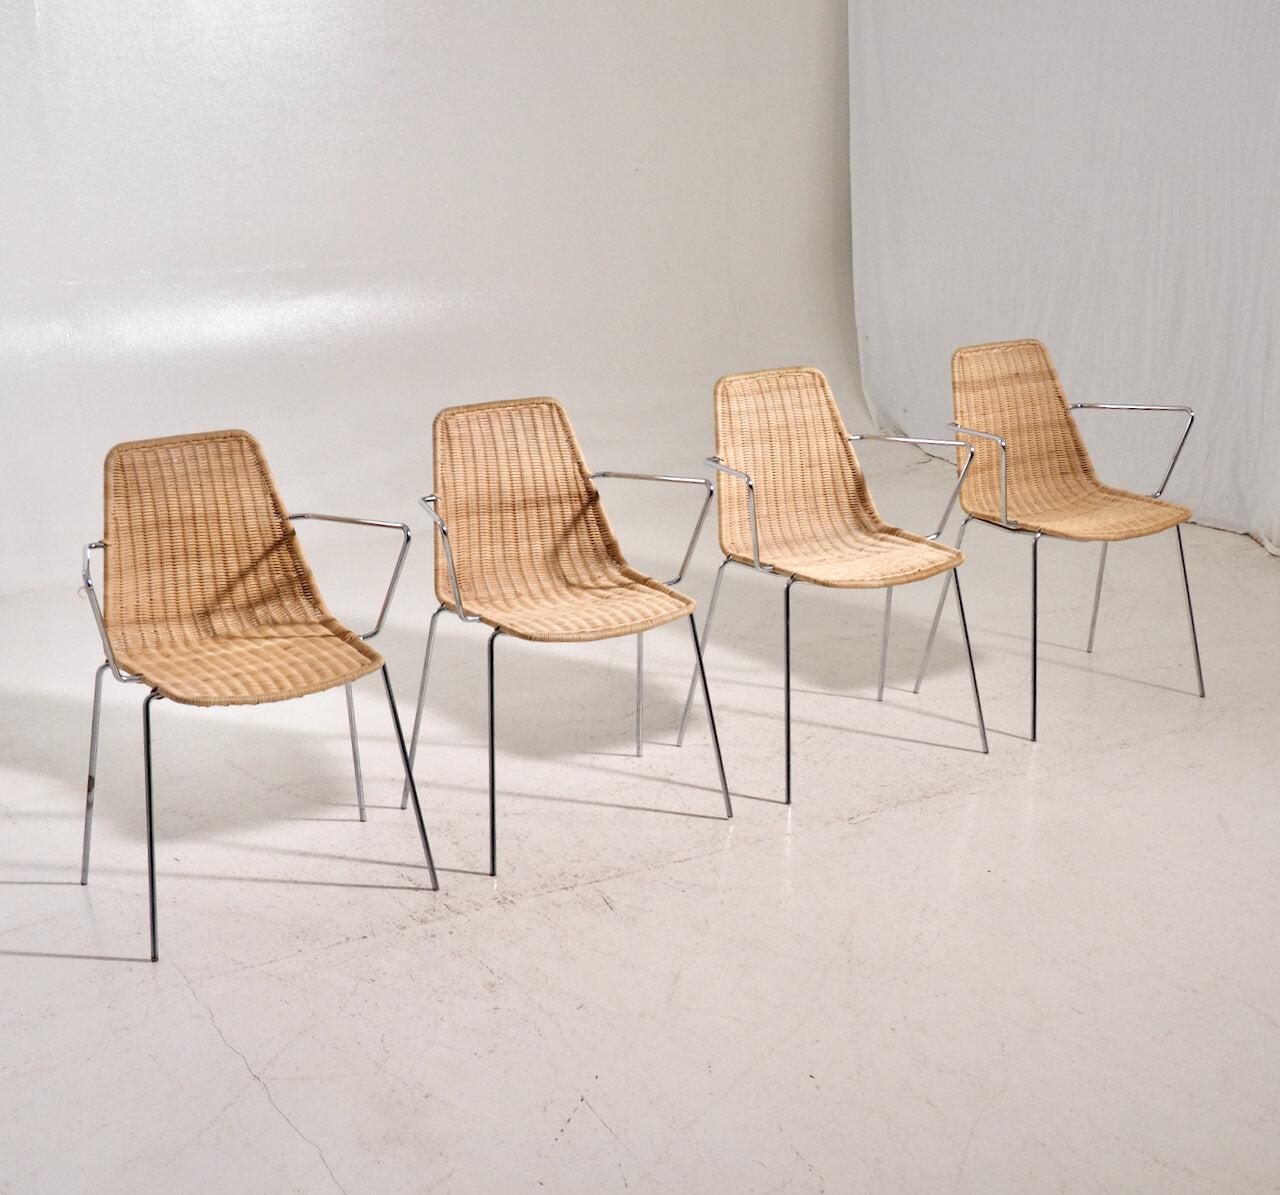 Four Danish modern armchairs, late 20th century.